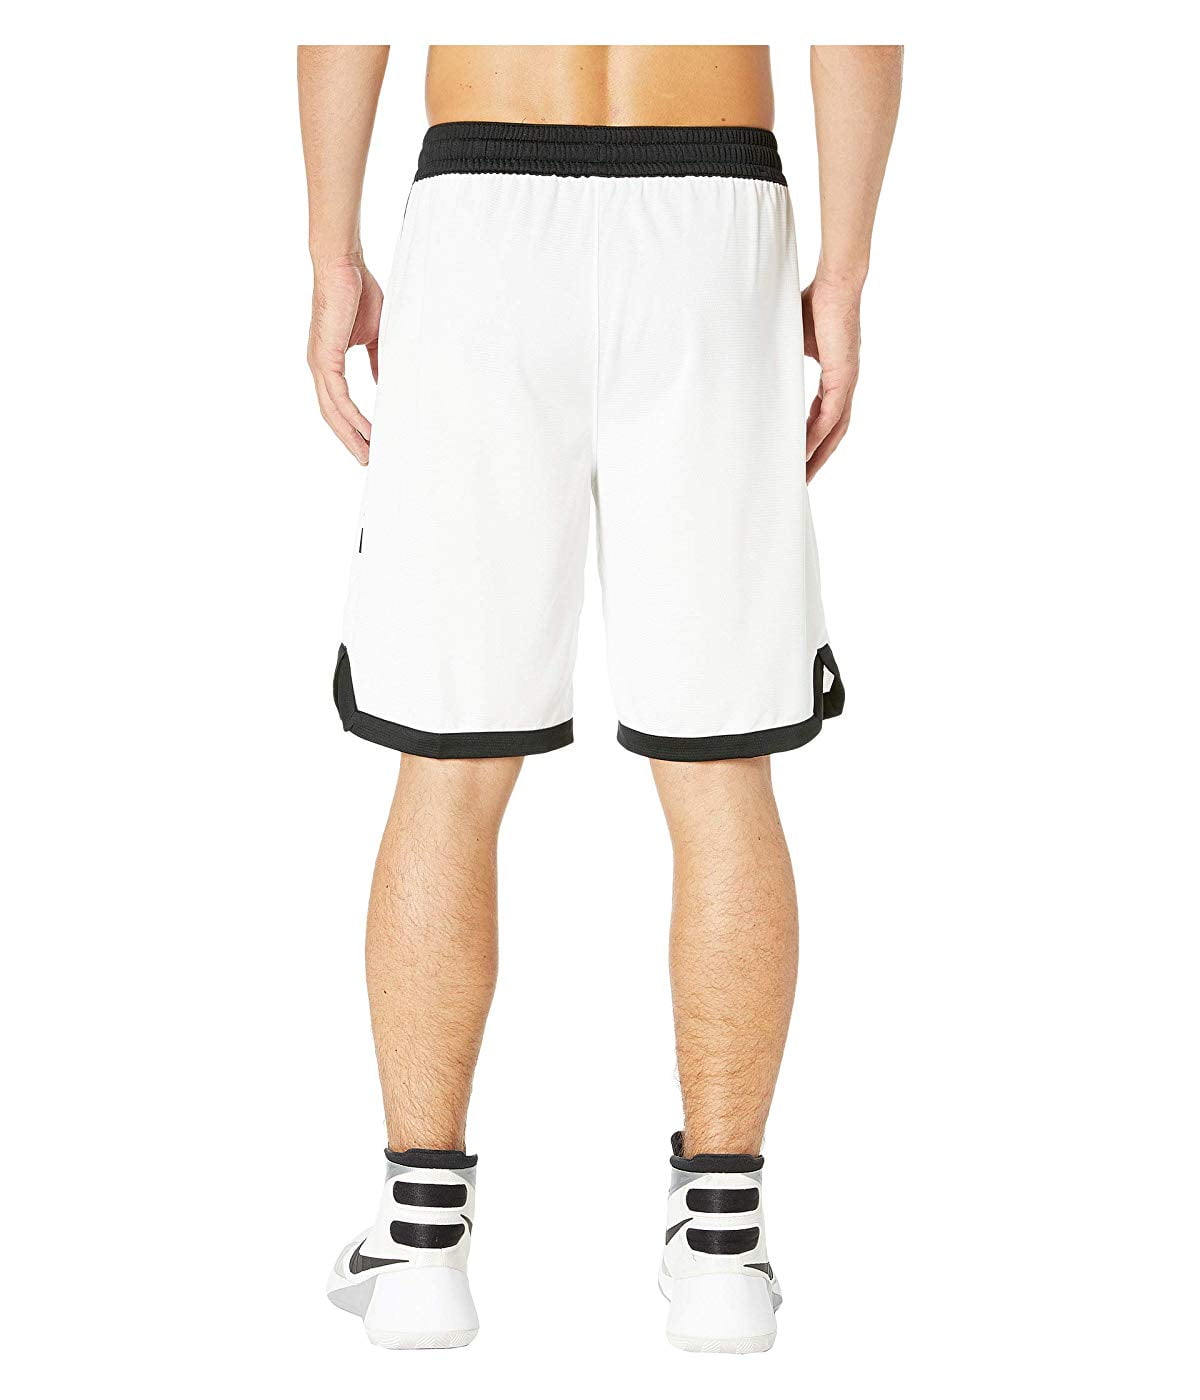 Nike Men's Dry Elite Stripe Basketball Shorts - Walmart.com